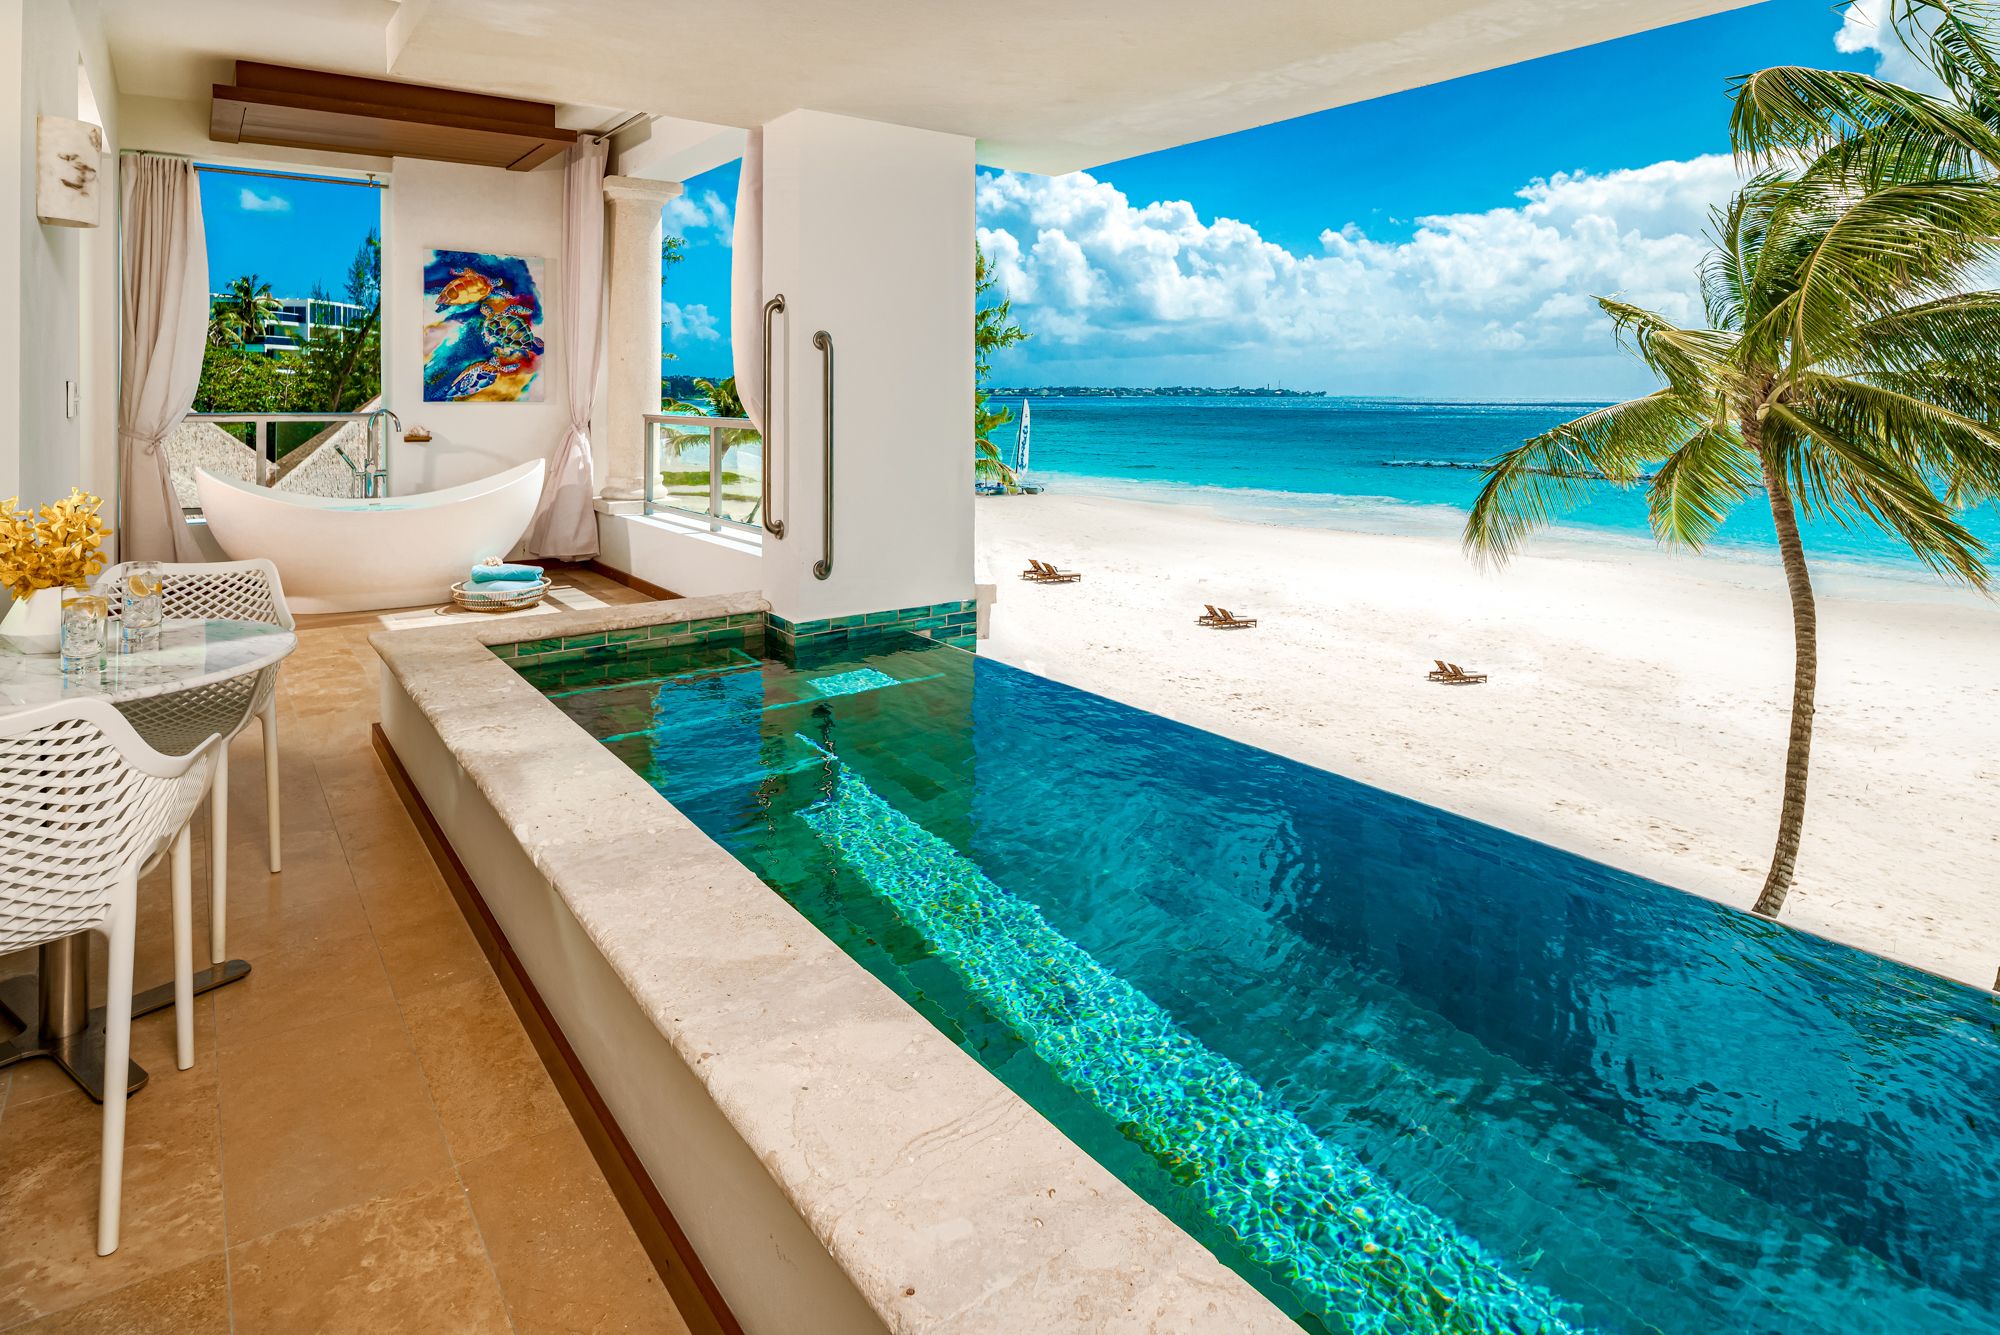 Sandals Royal Barbados Beachfront SkyPool Butler Suite Pool